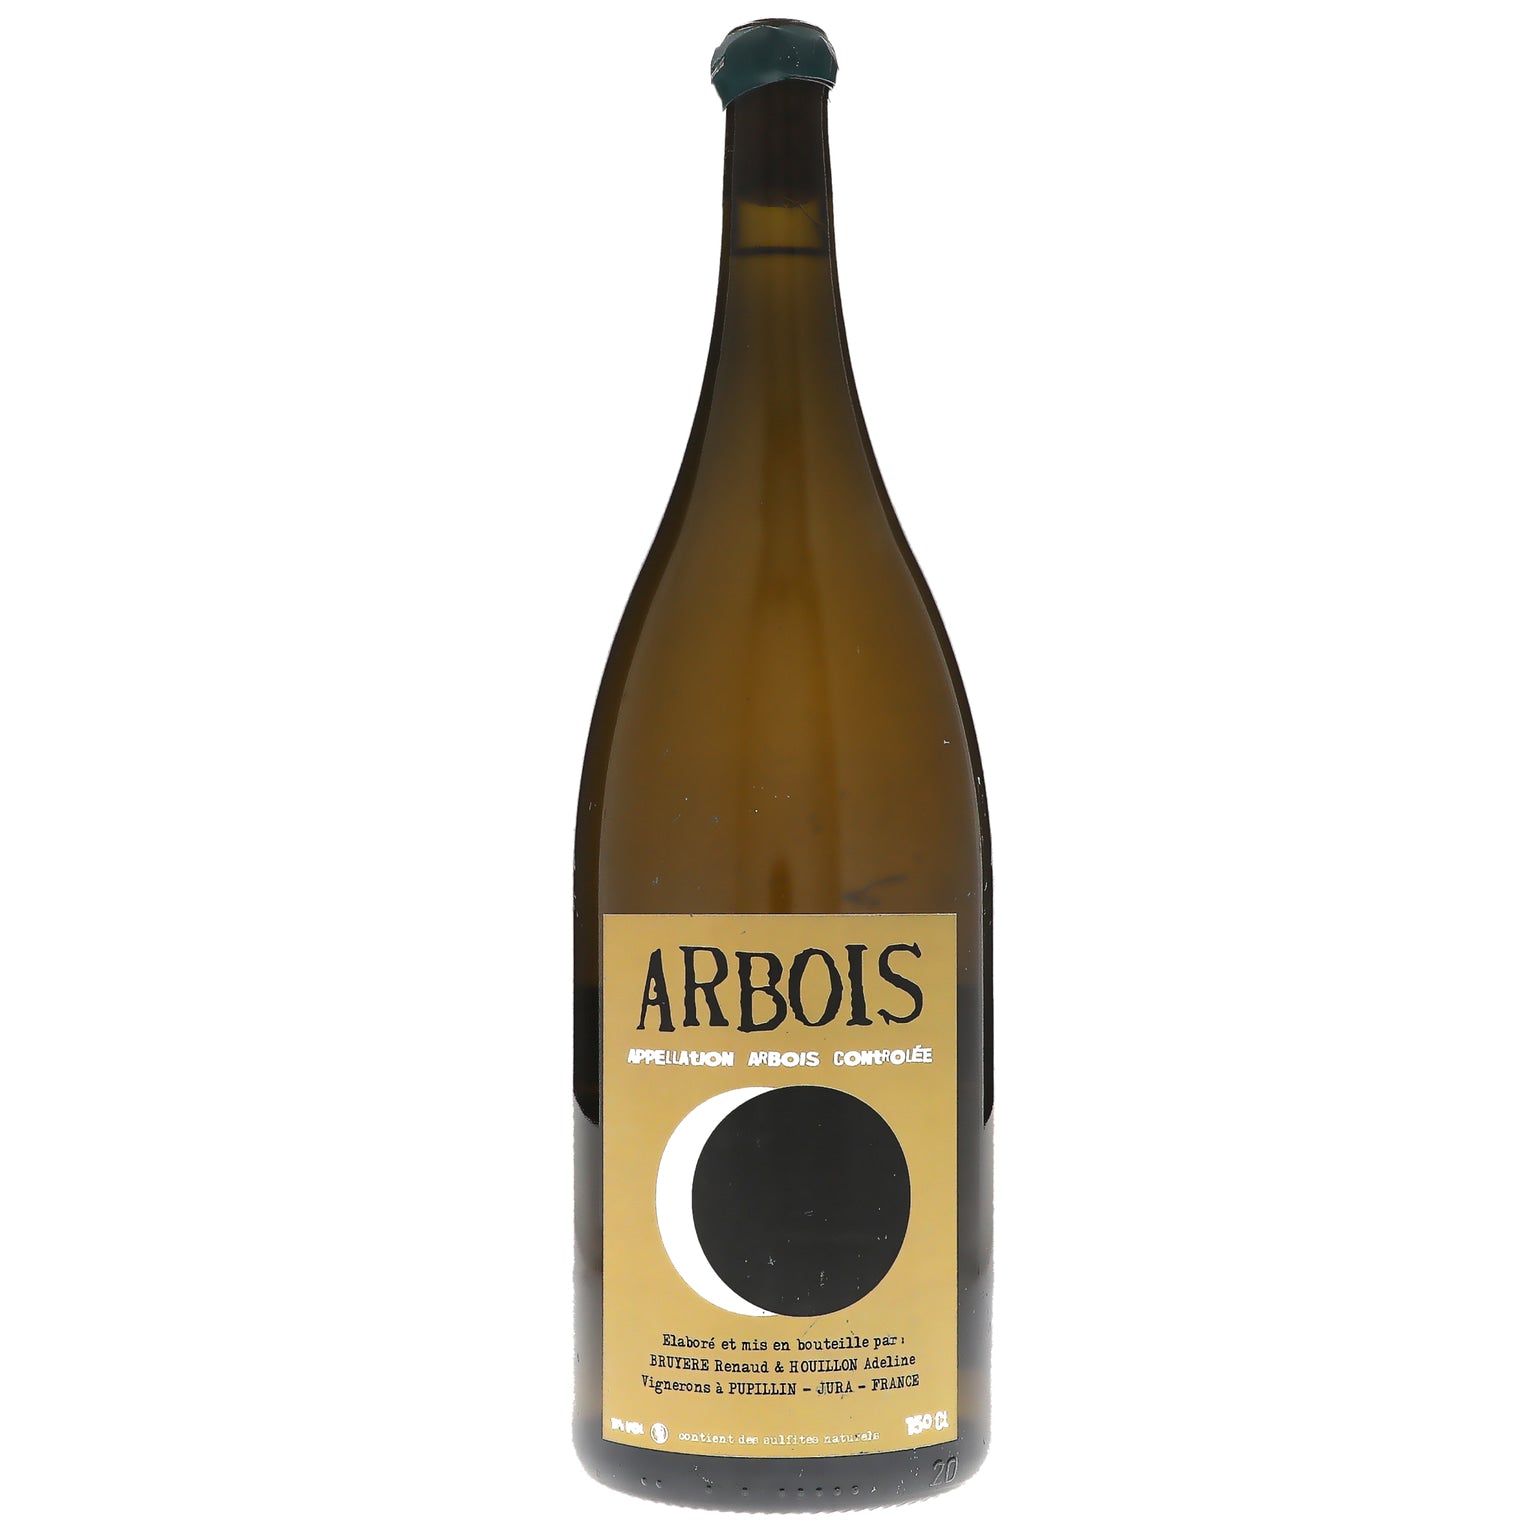 2015 Bruyere Renaud & Houillon Adeline, Arbois, Les Tourillons Chardonnay Savagnin 1.5L